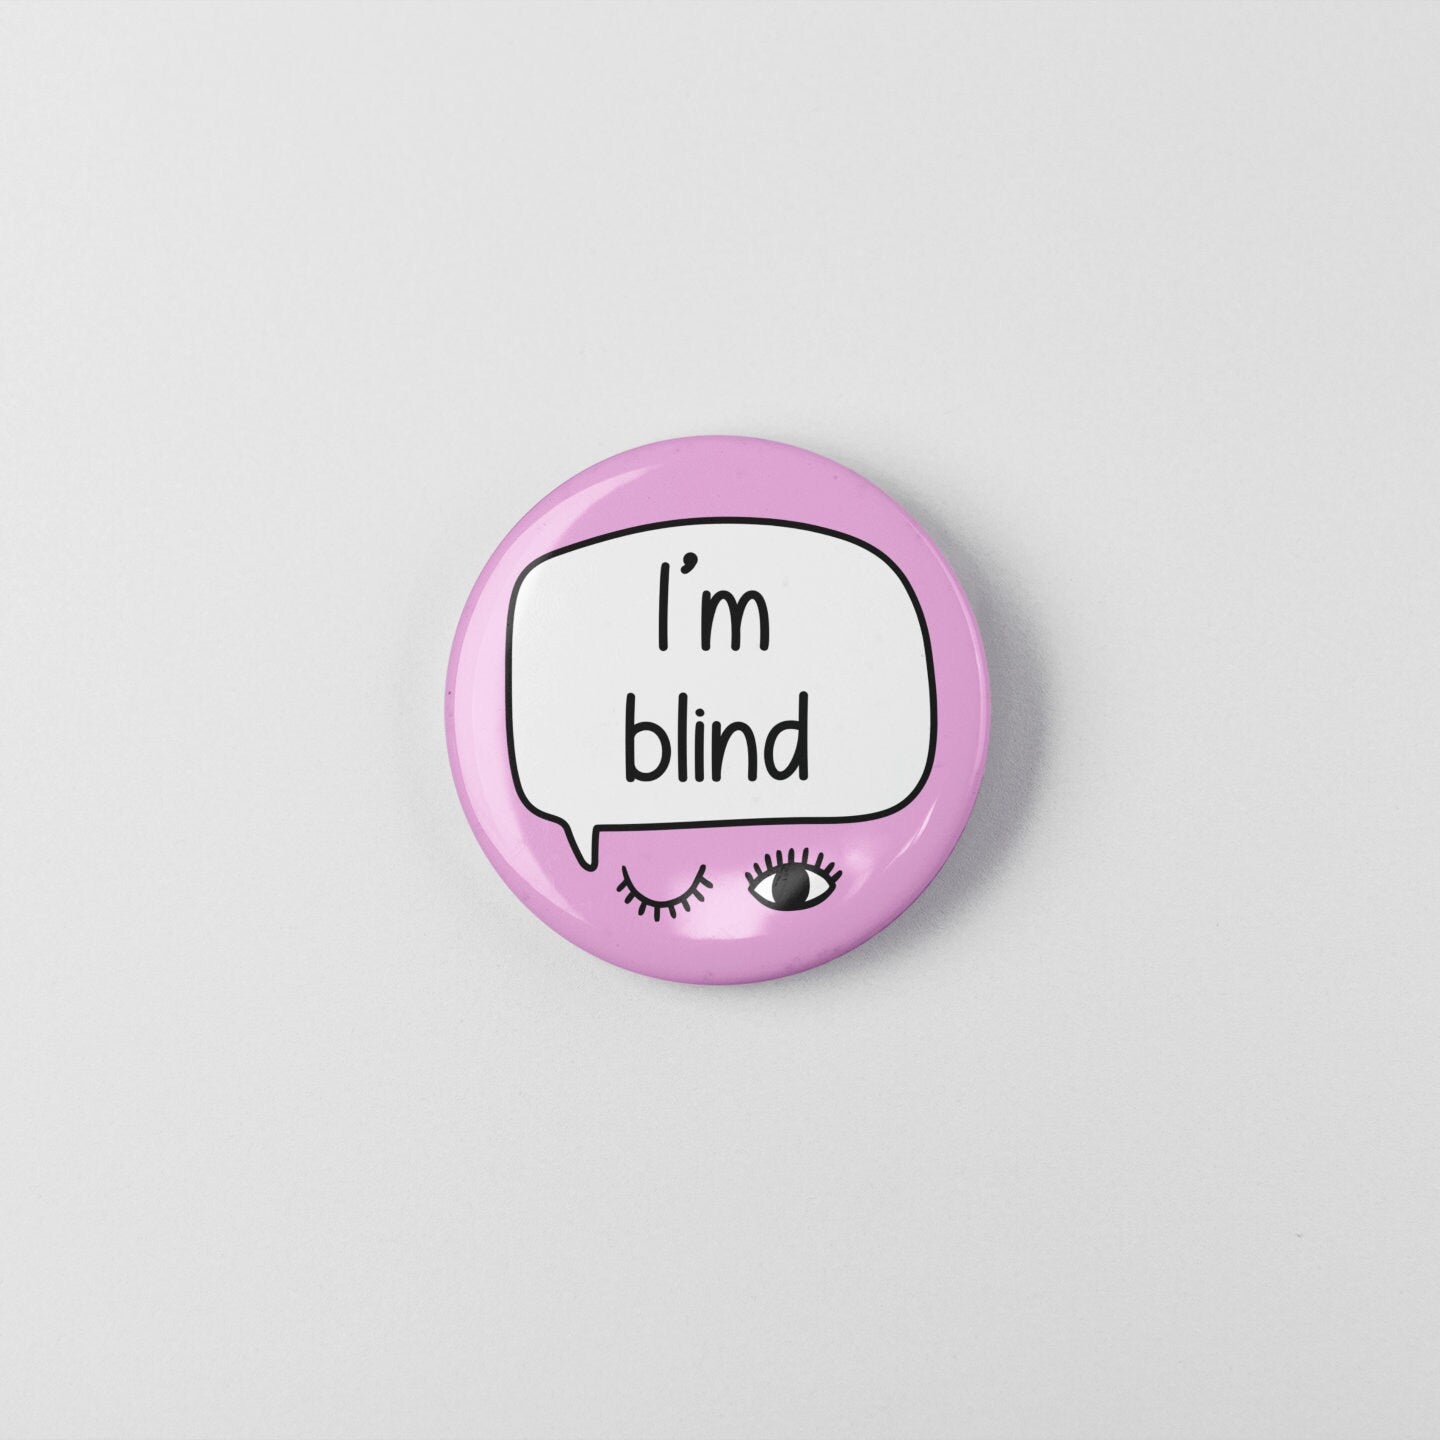 I'm Blind - Badge Pin | Blindness Pins